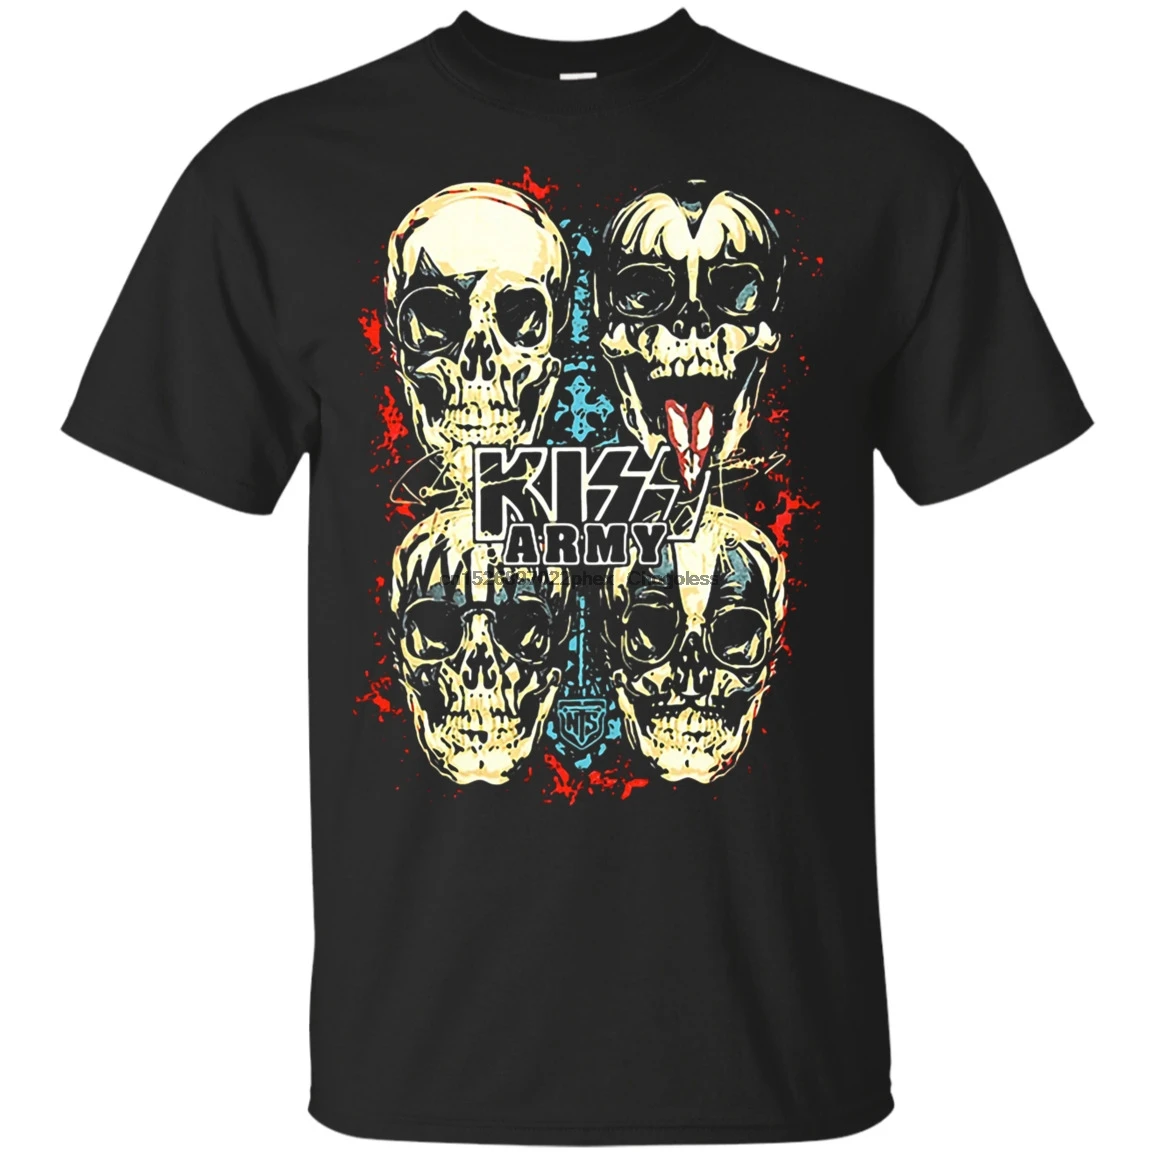 Kiss Army - Rock Band футболка черного цвета из хлопка | Мужская одежда